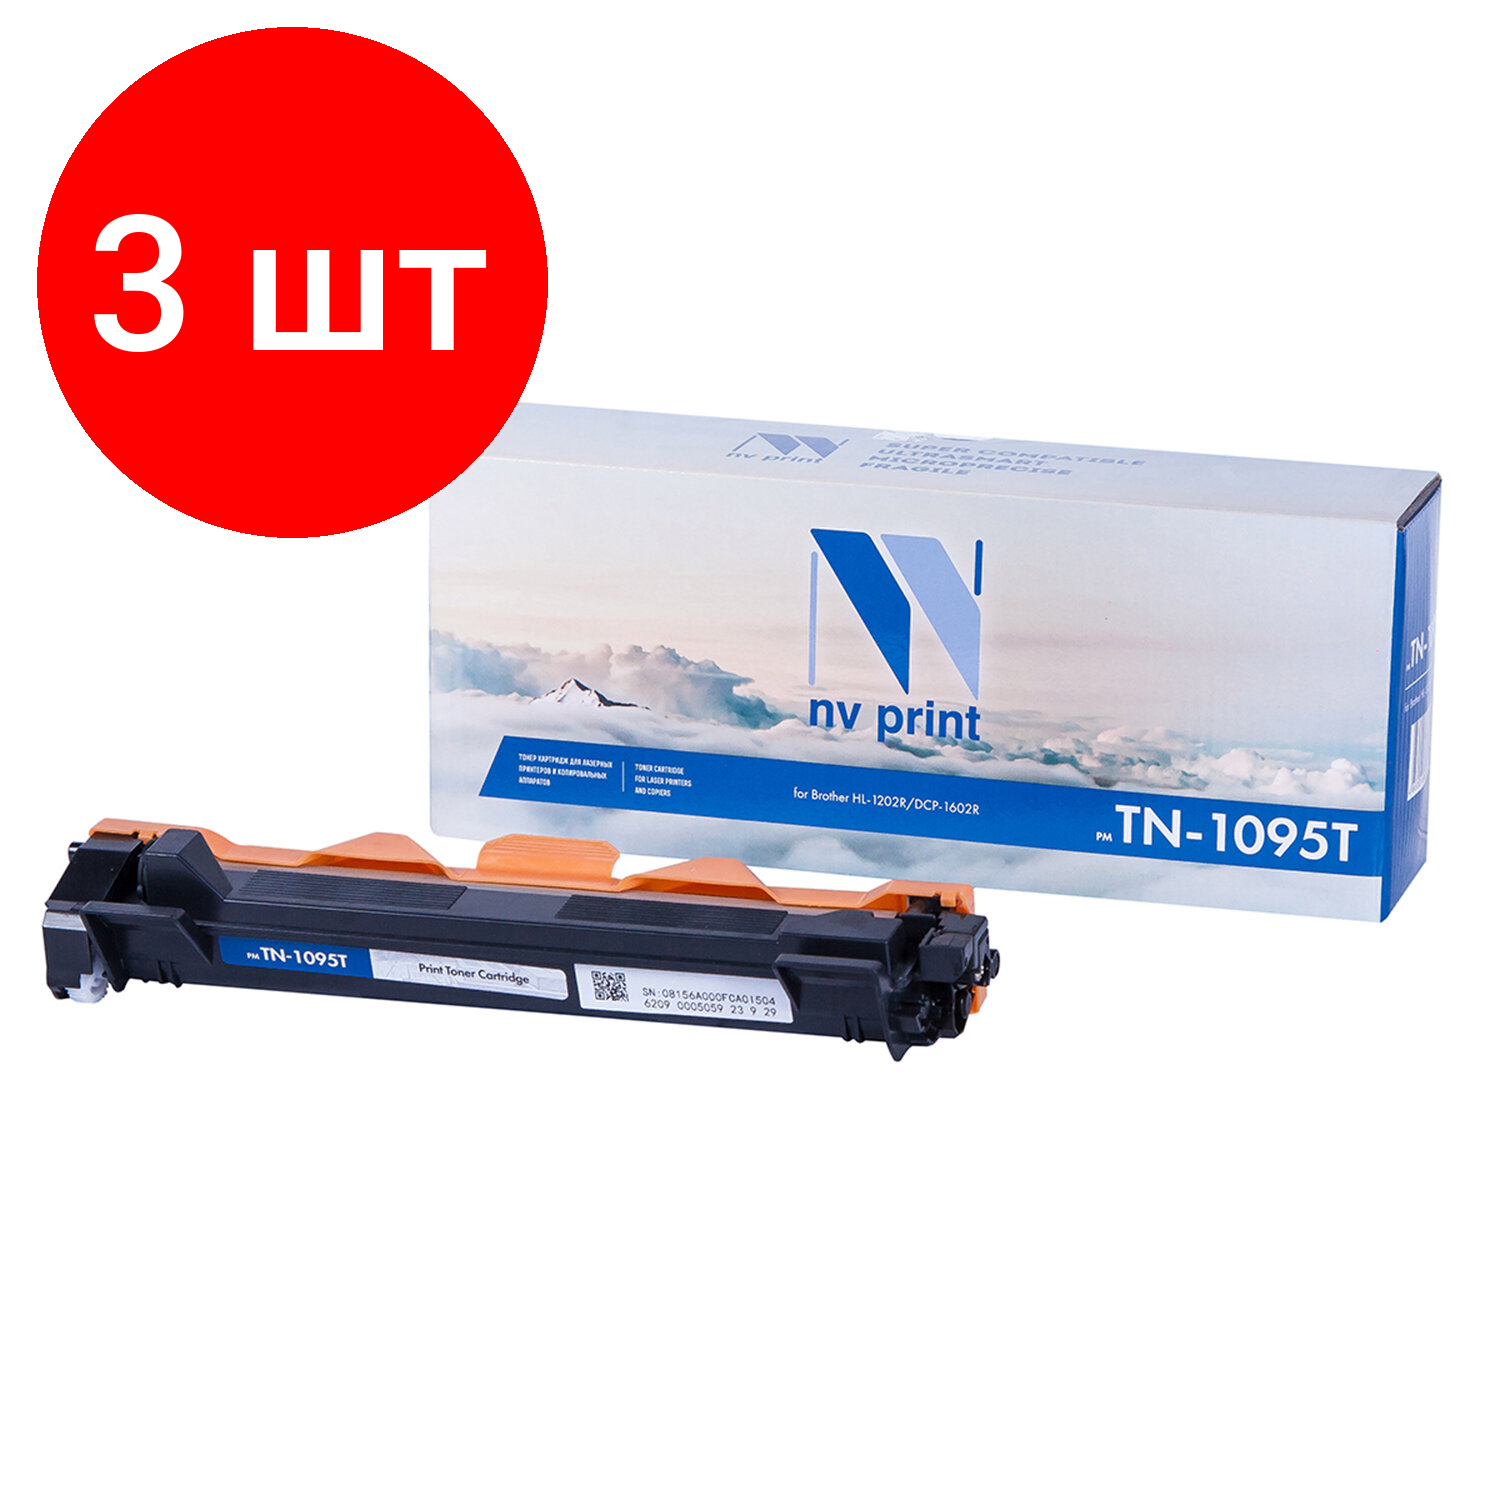 Комплект 3 шт, Картридж лазерный NV PRINT (NV-TN1095) для BROTHER HL-1202R/DCP-1602R, ресурс 1500 страниц